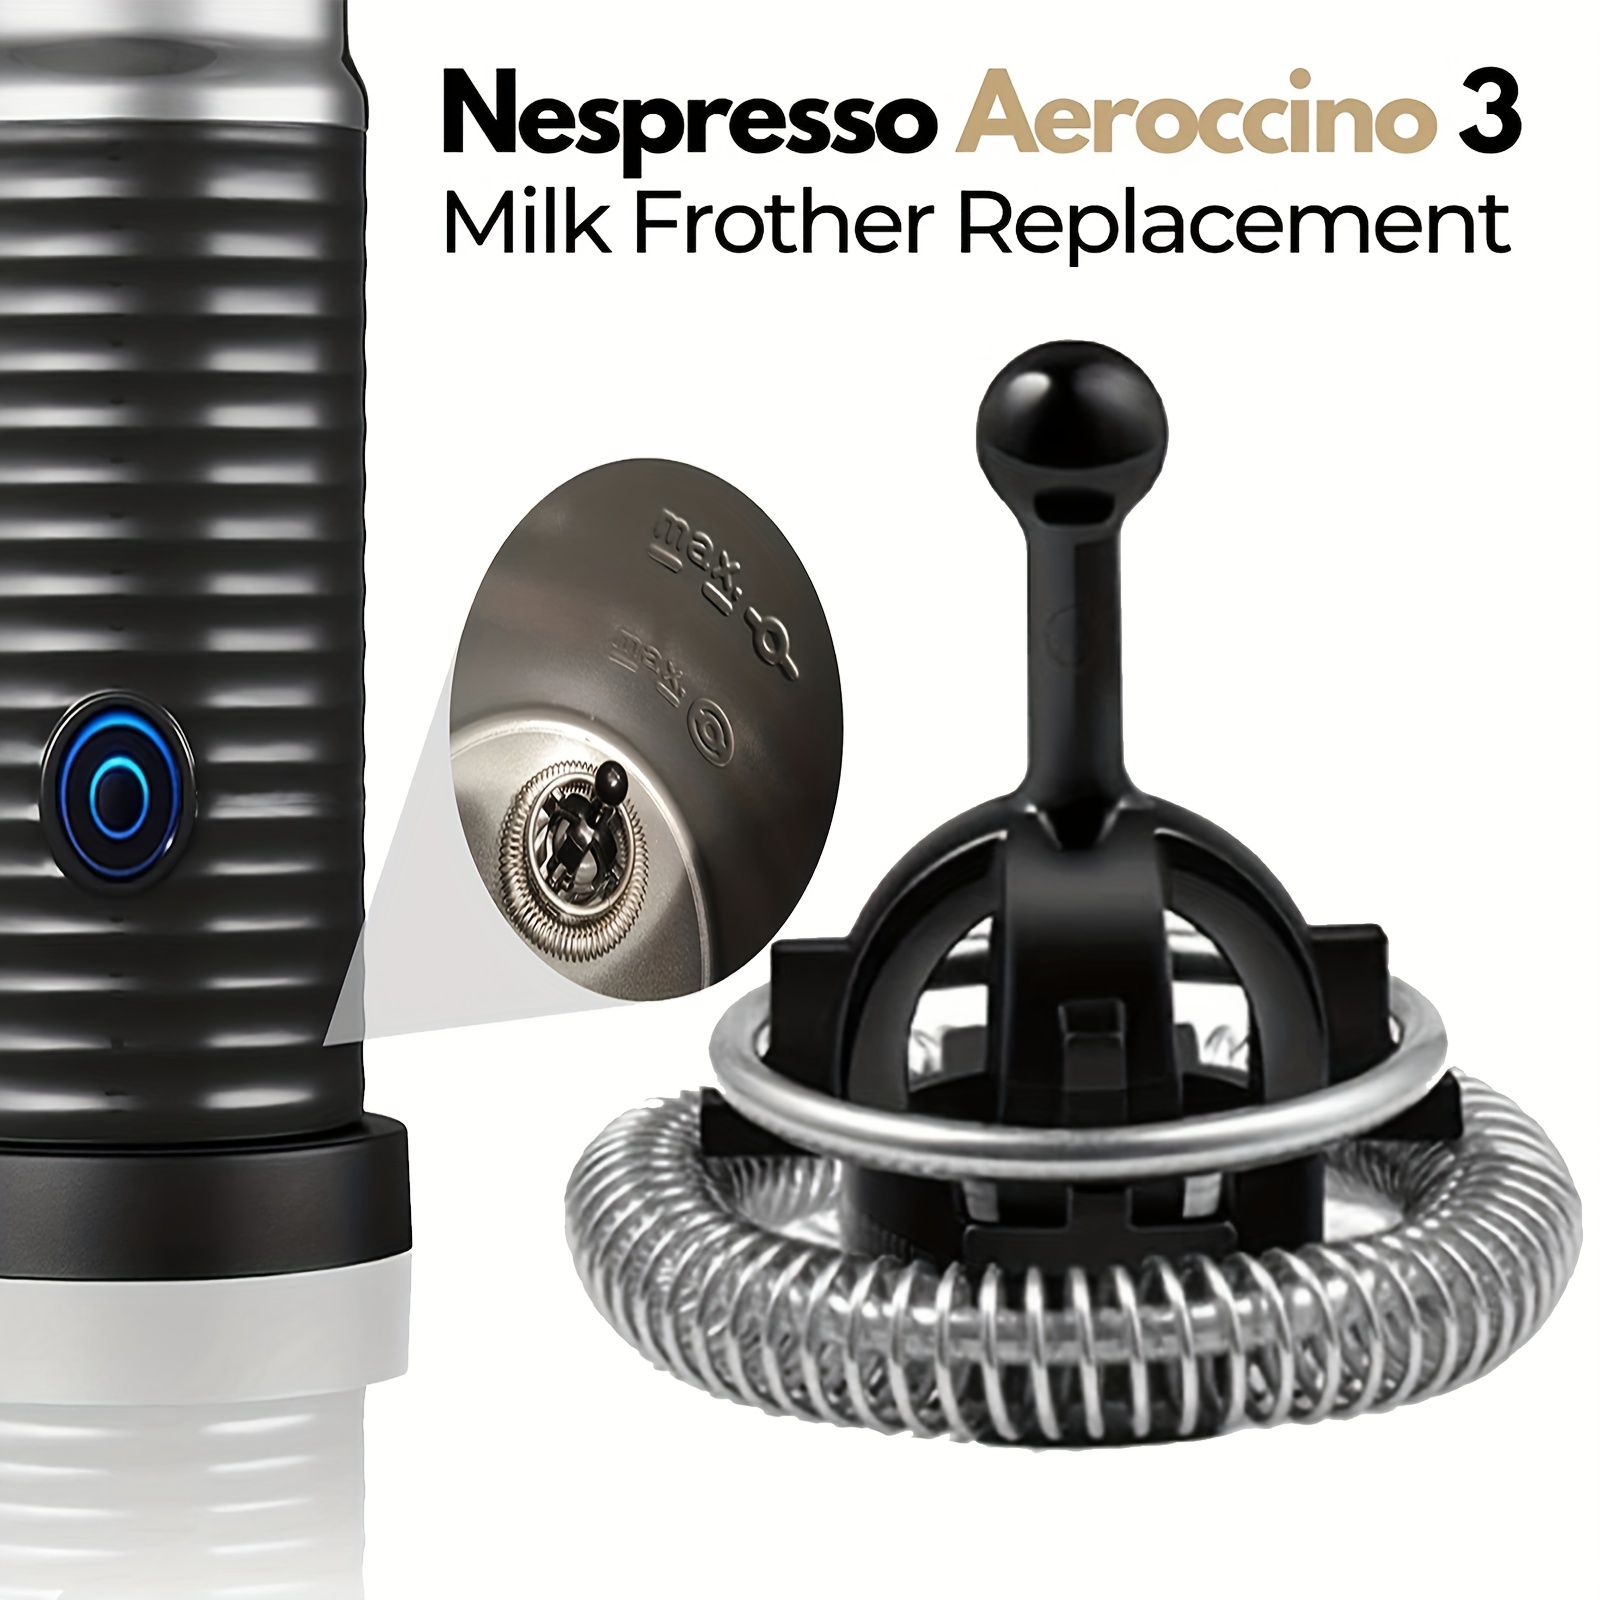 Aeroccino4, Milk Frother Accessory